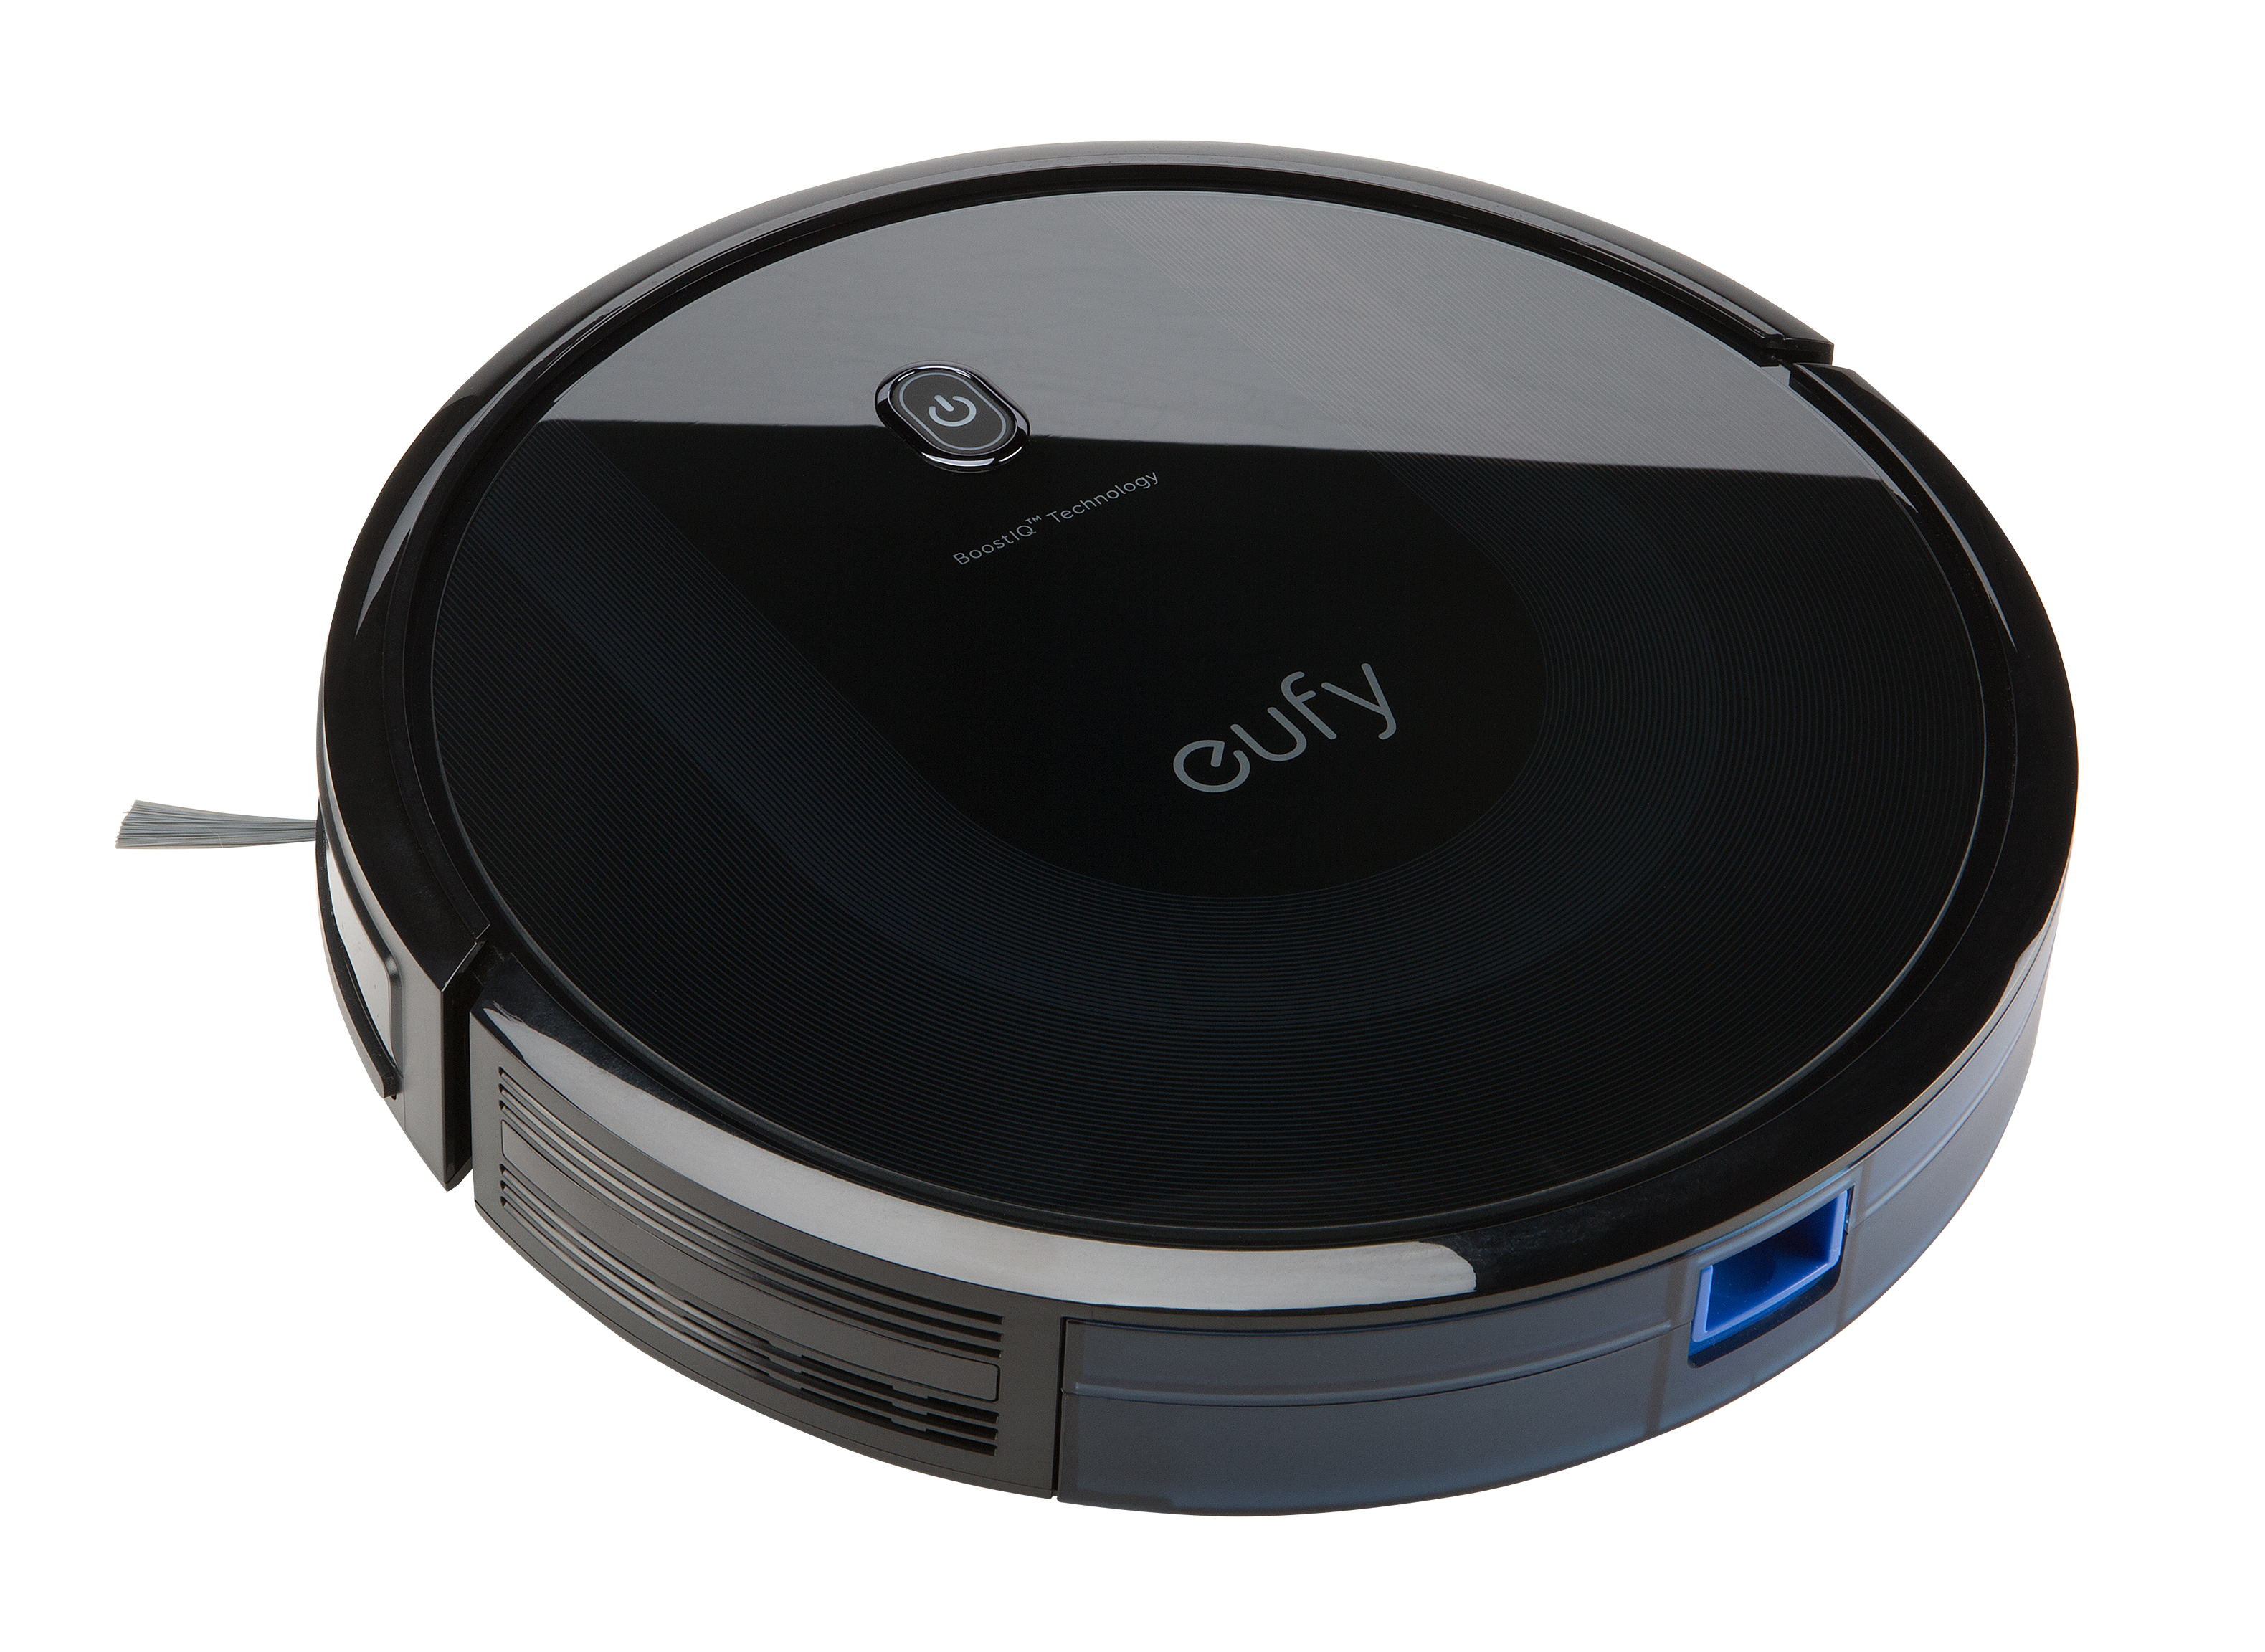 Eufy RoboVac 11S Max Vacuum Cleaner - Consumer Reports